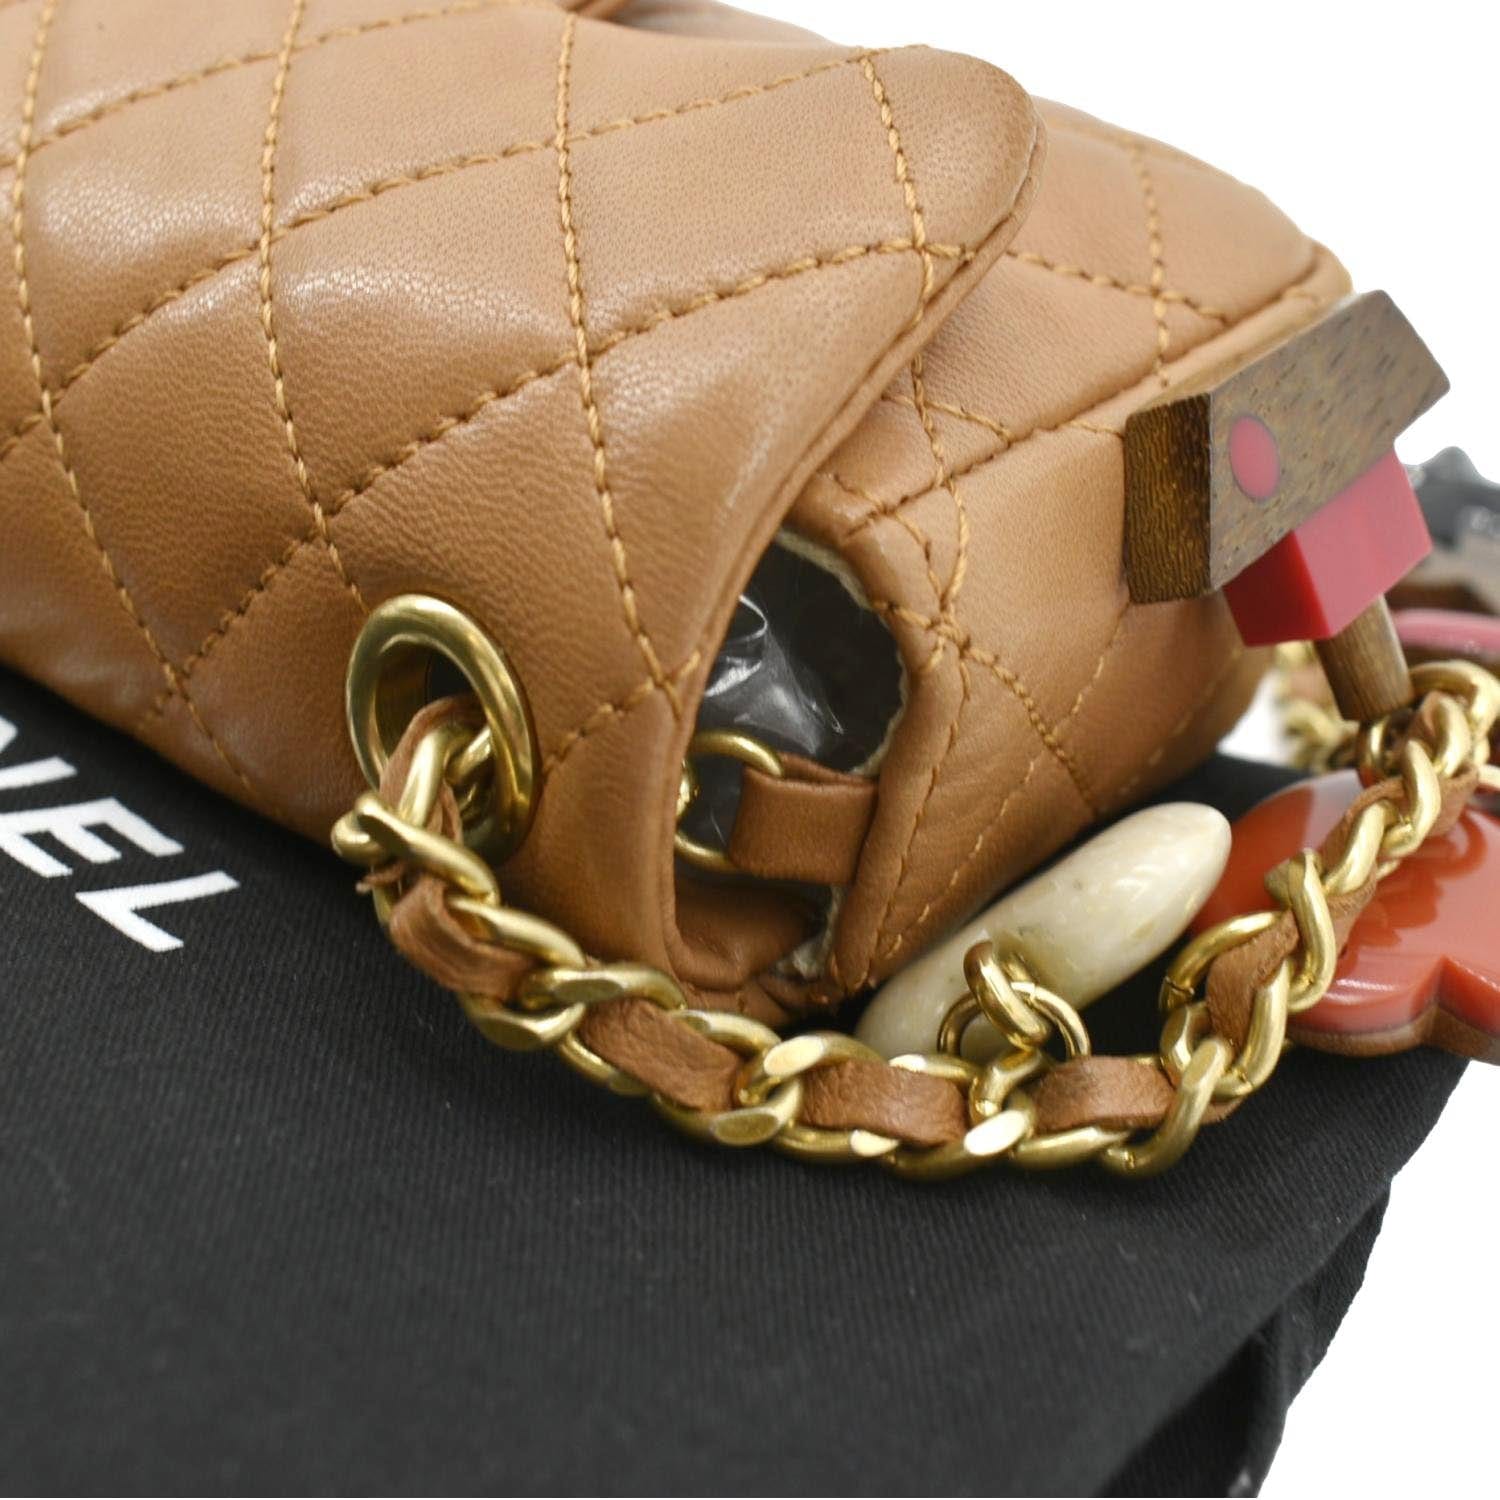 Chanel Marine Charms Mini Crossbody Bag